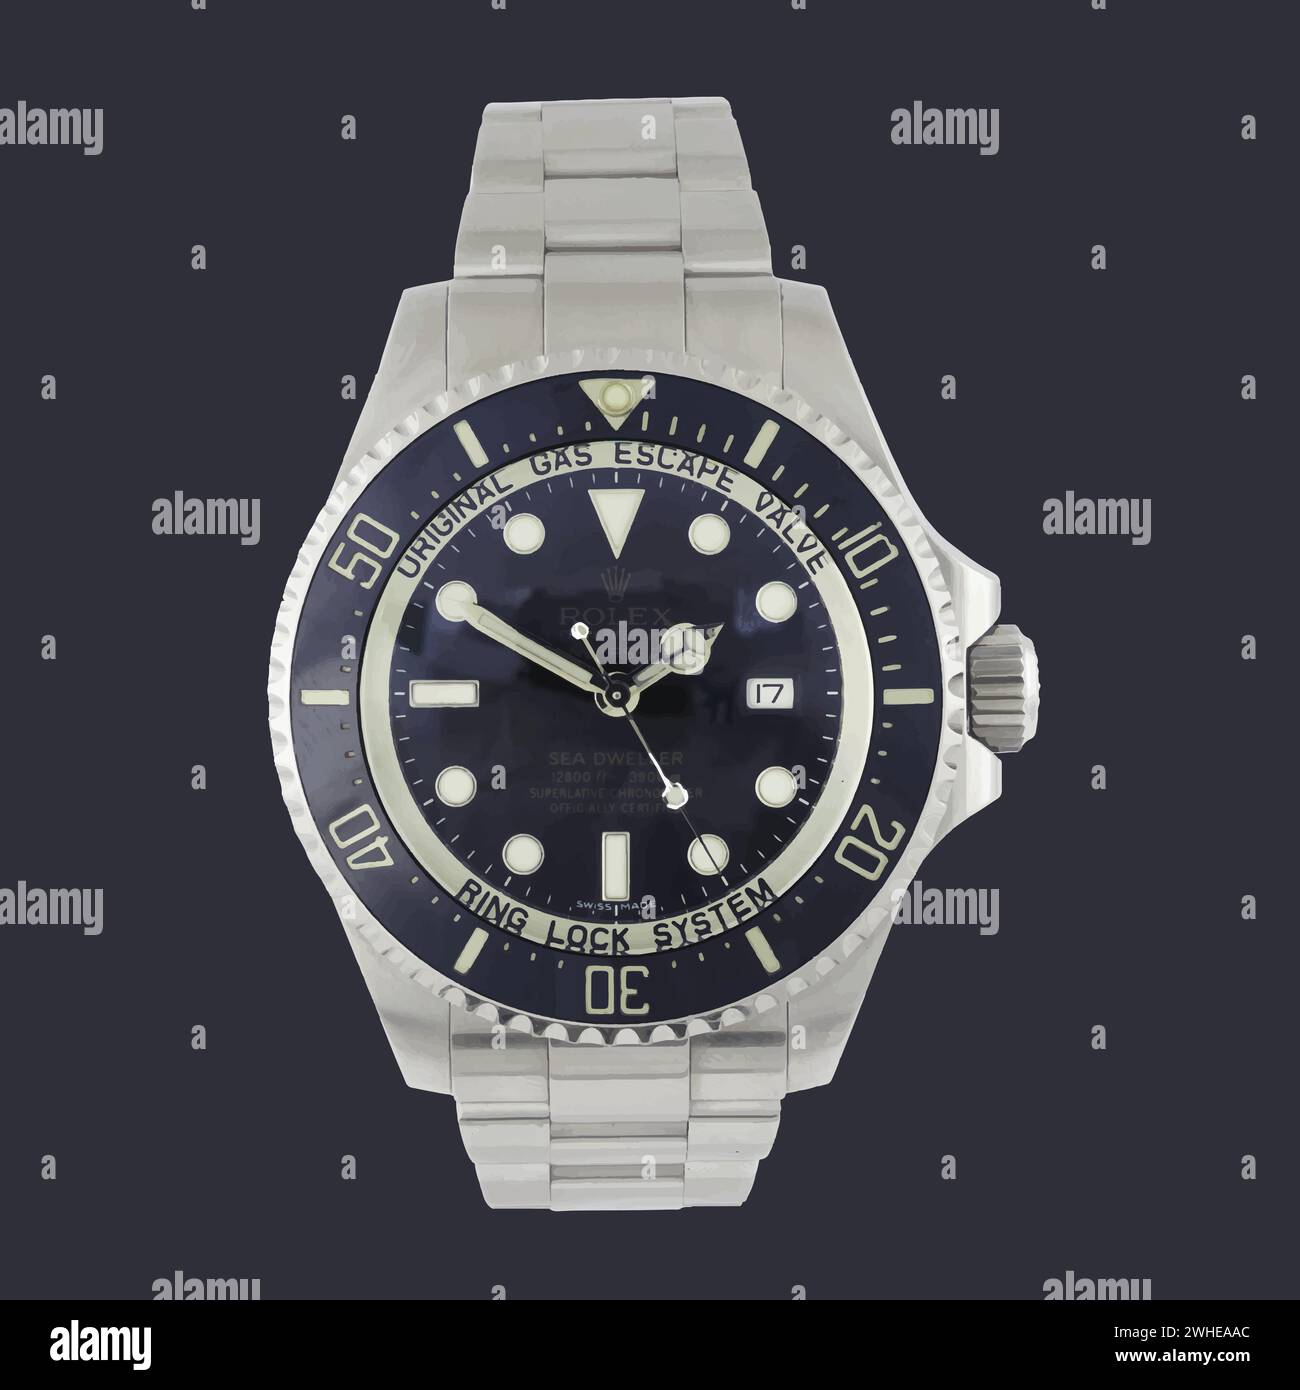 Rolex silver belt dark blue and black wrist watch Stock Vector